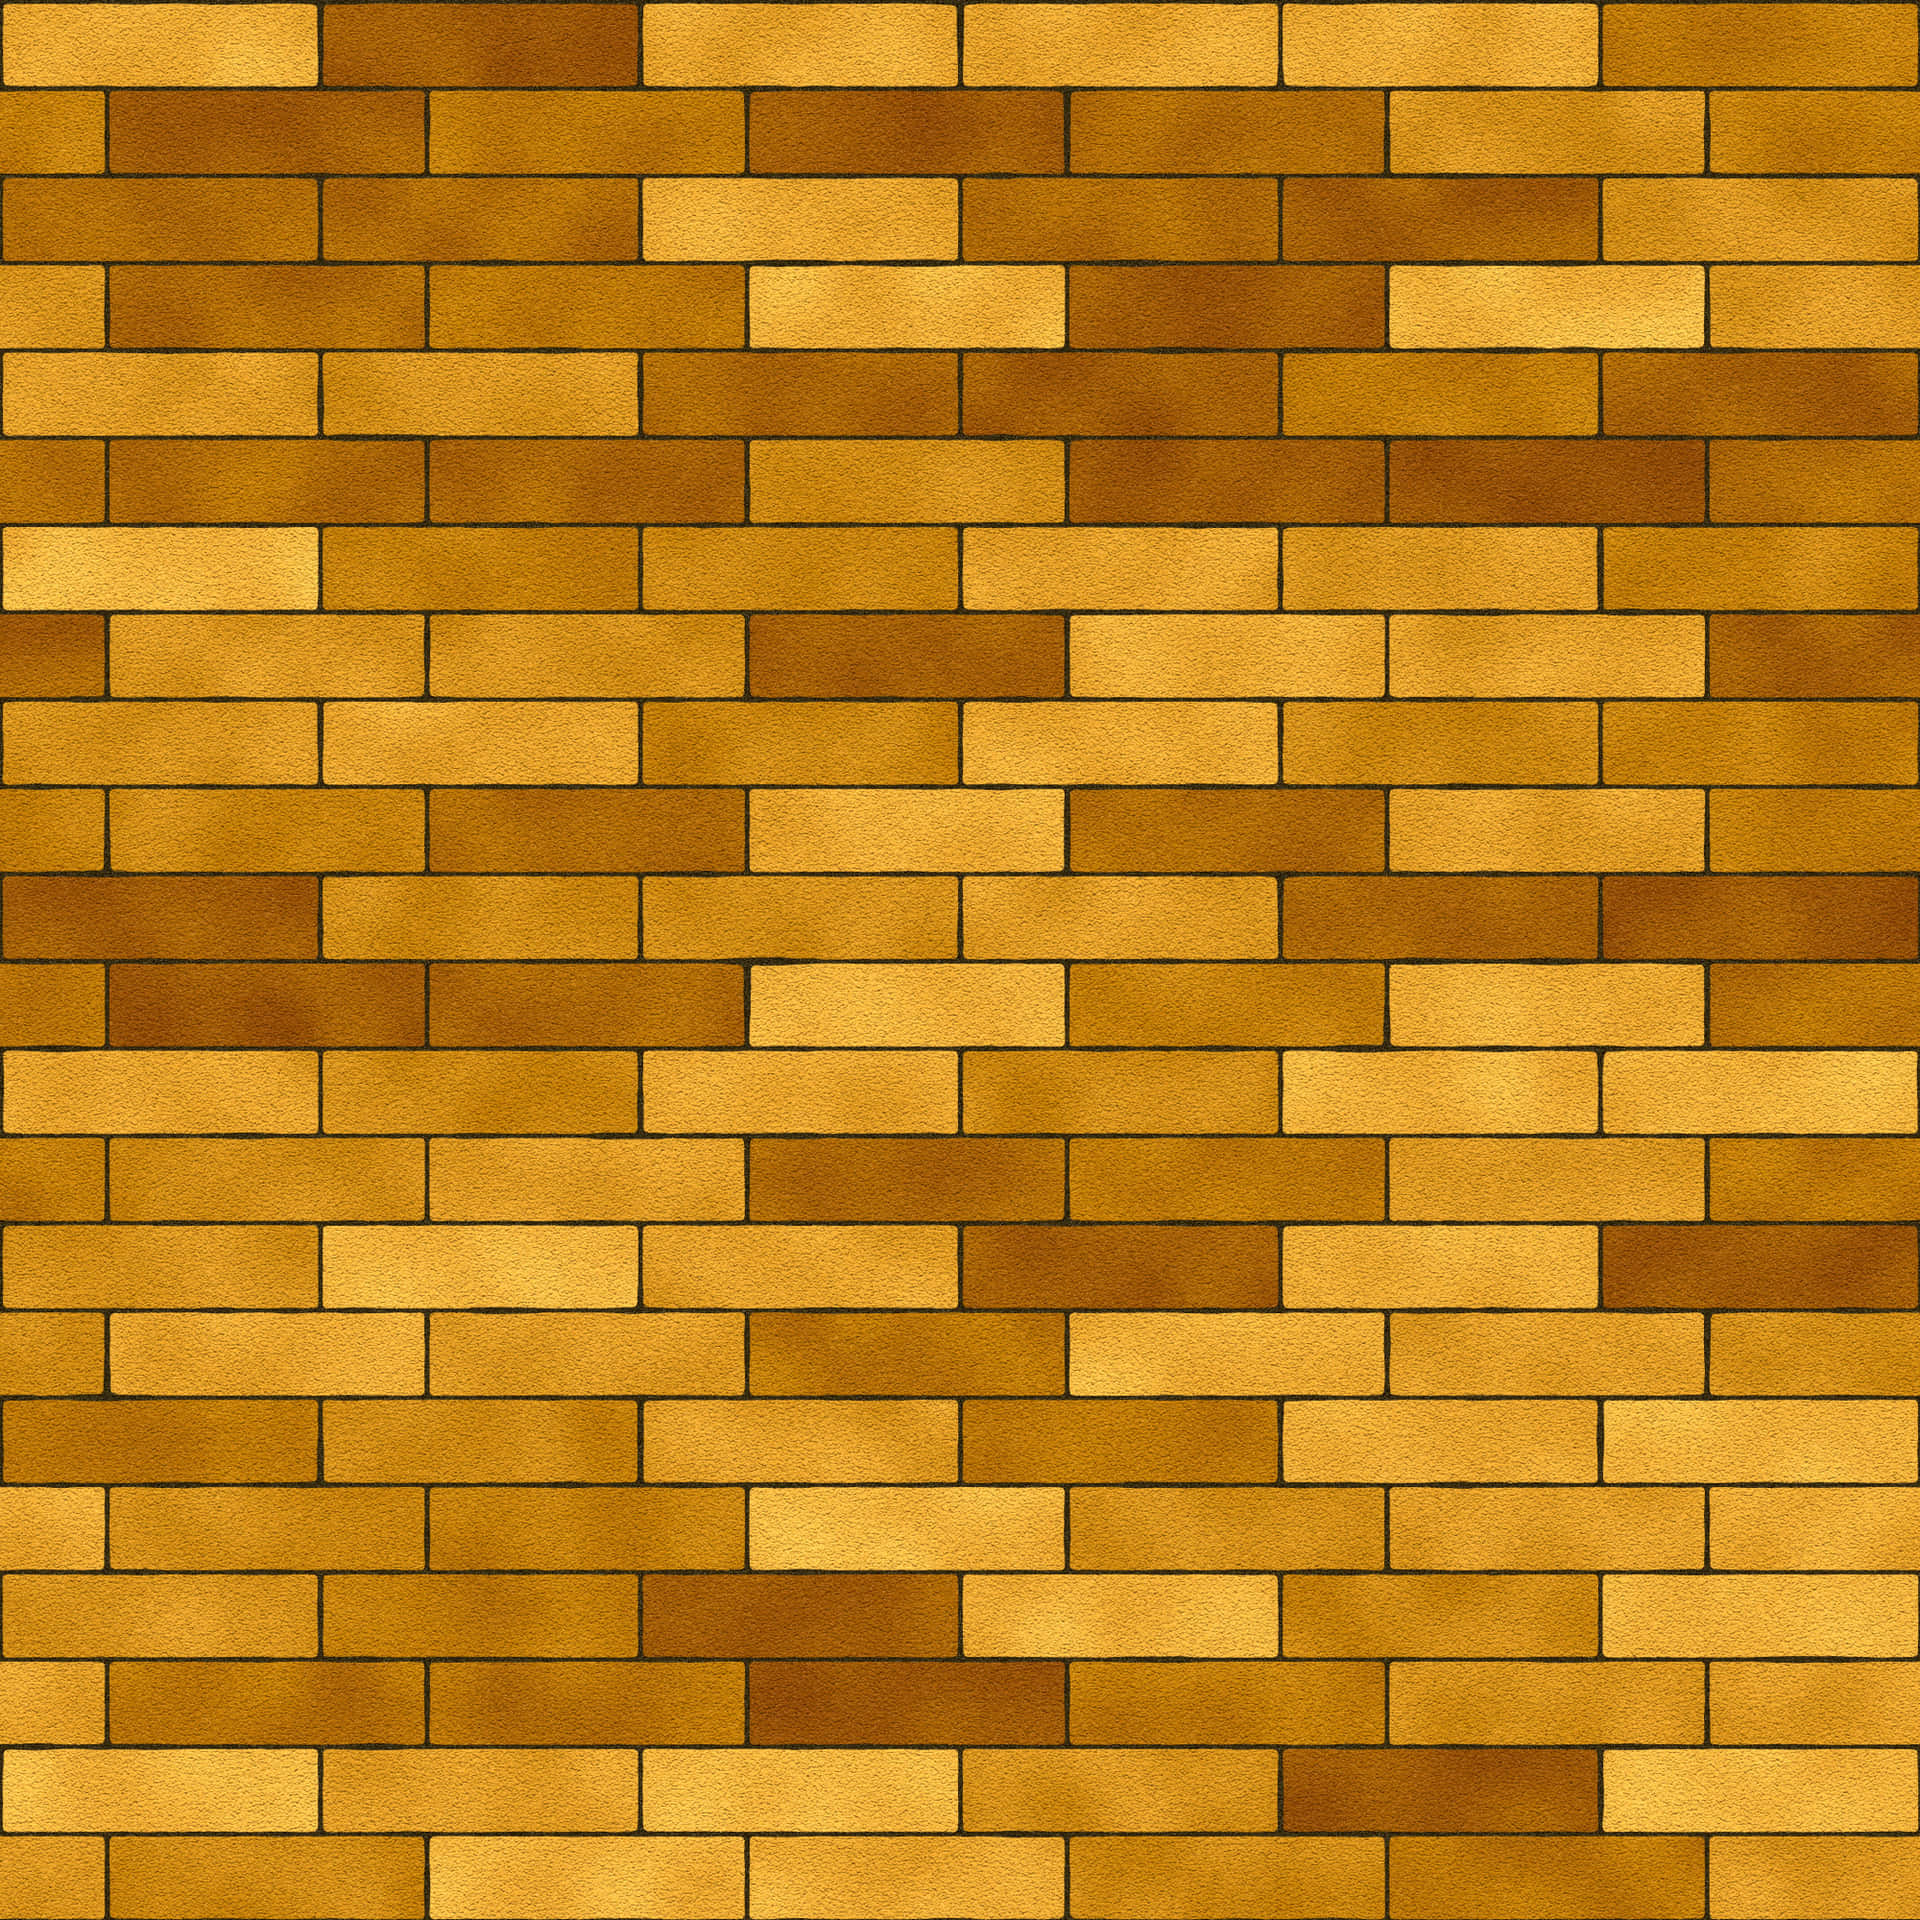 Brick Texture Pictures